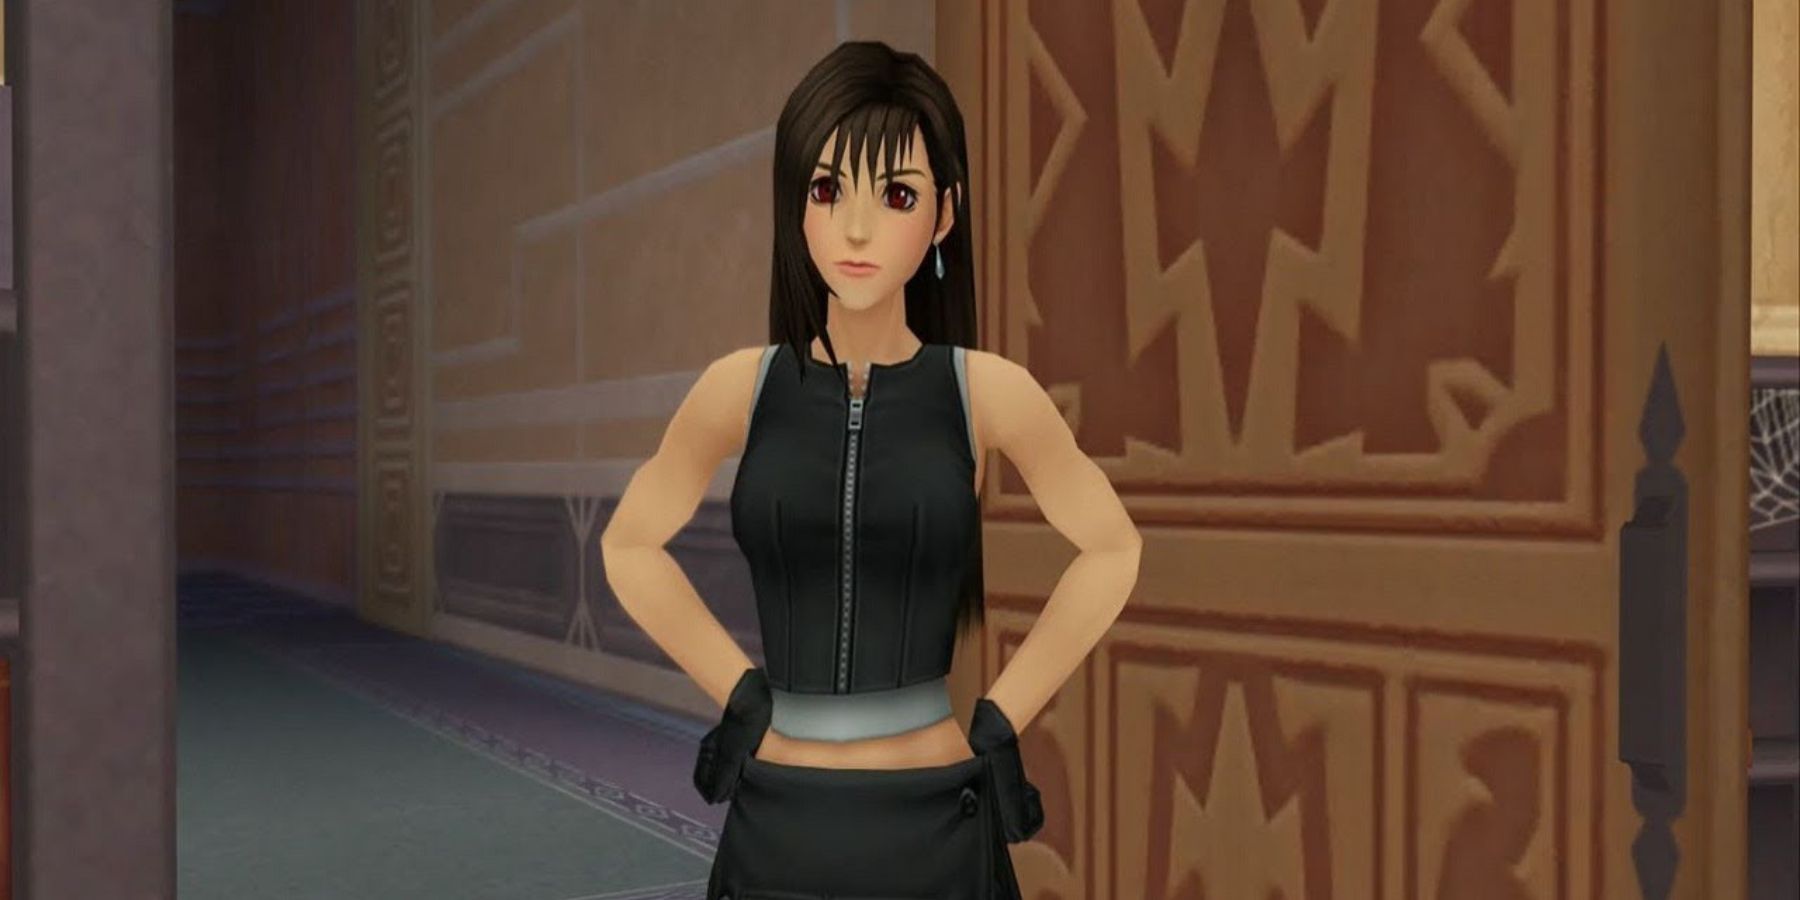 Tifa in Kingdom Hearts 2